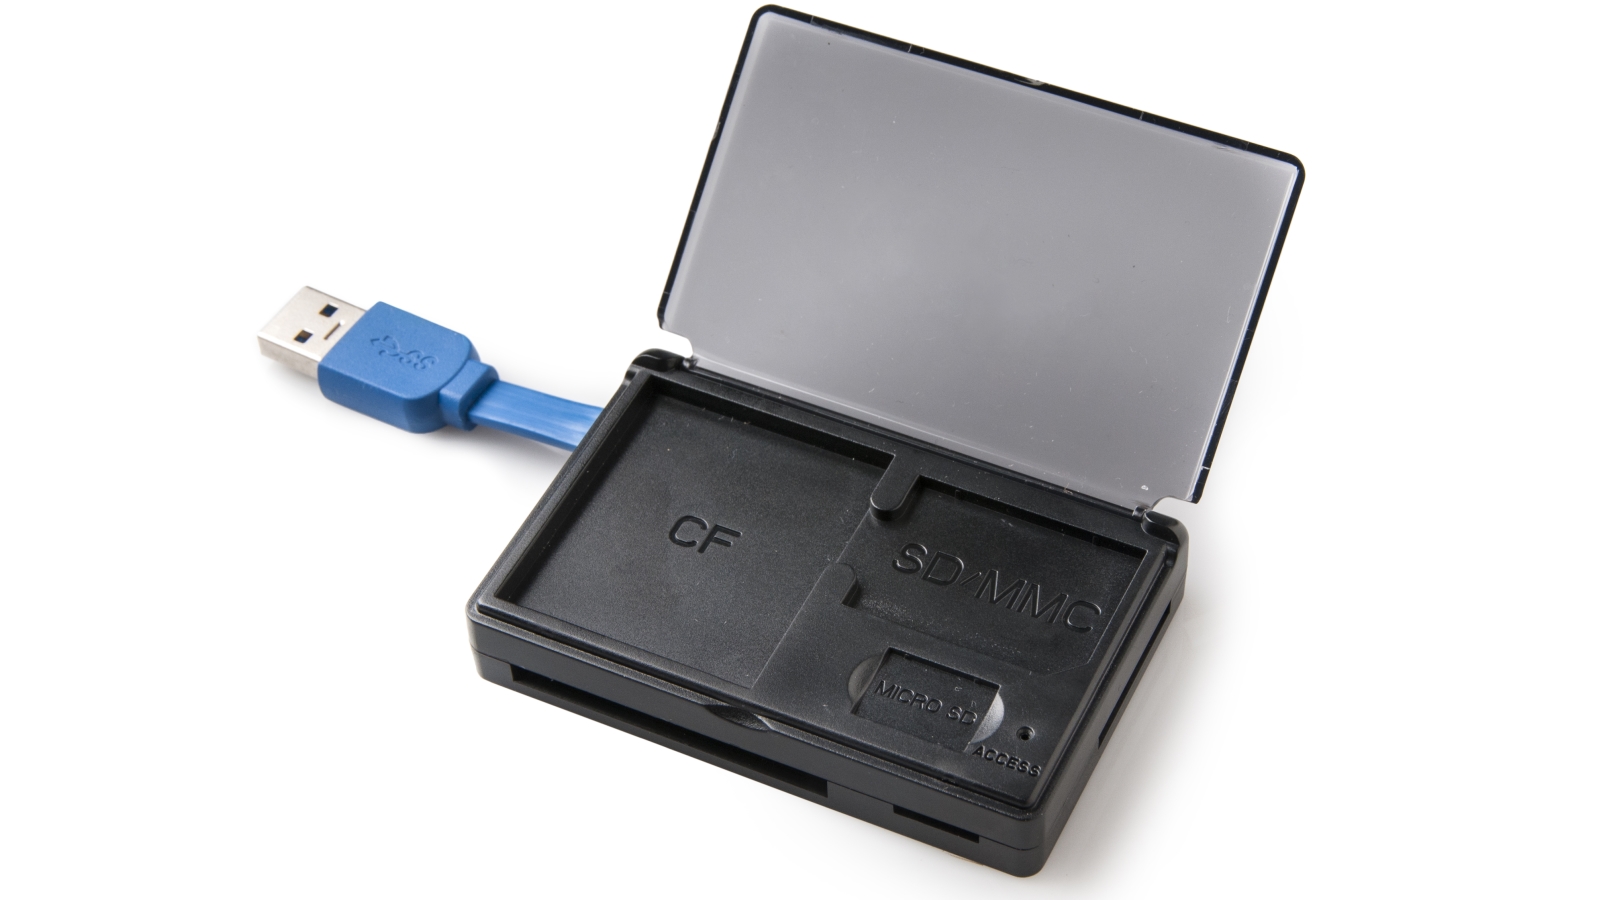 usb 3.0 compact card reader